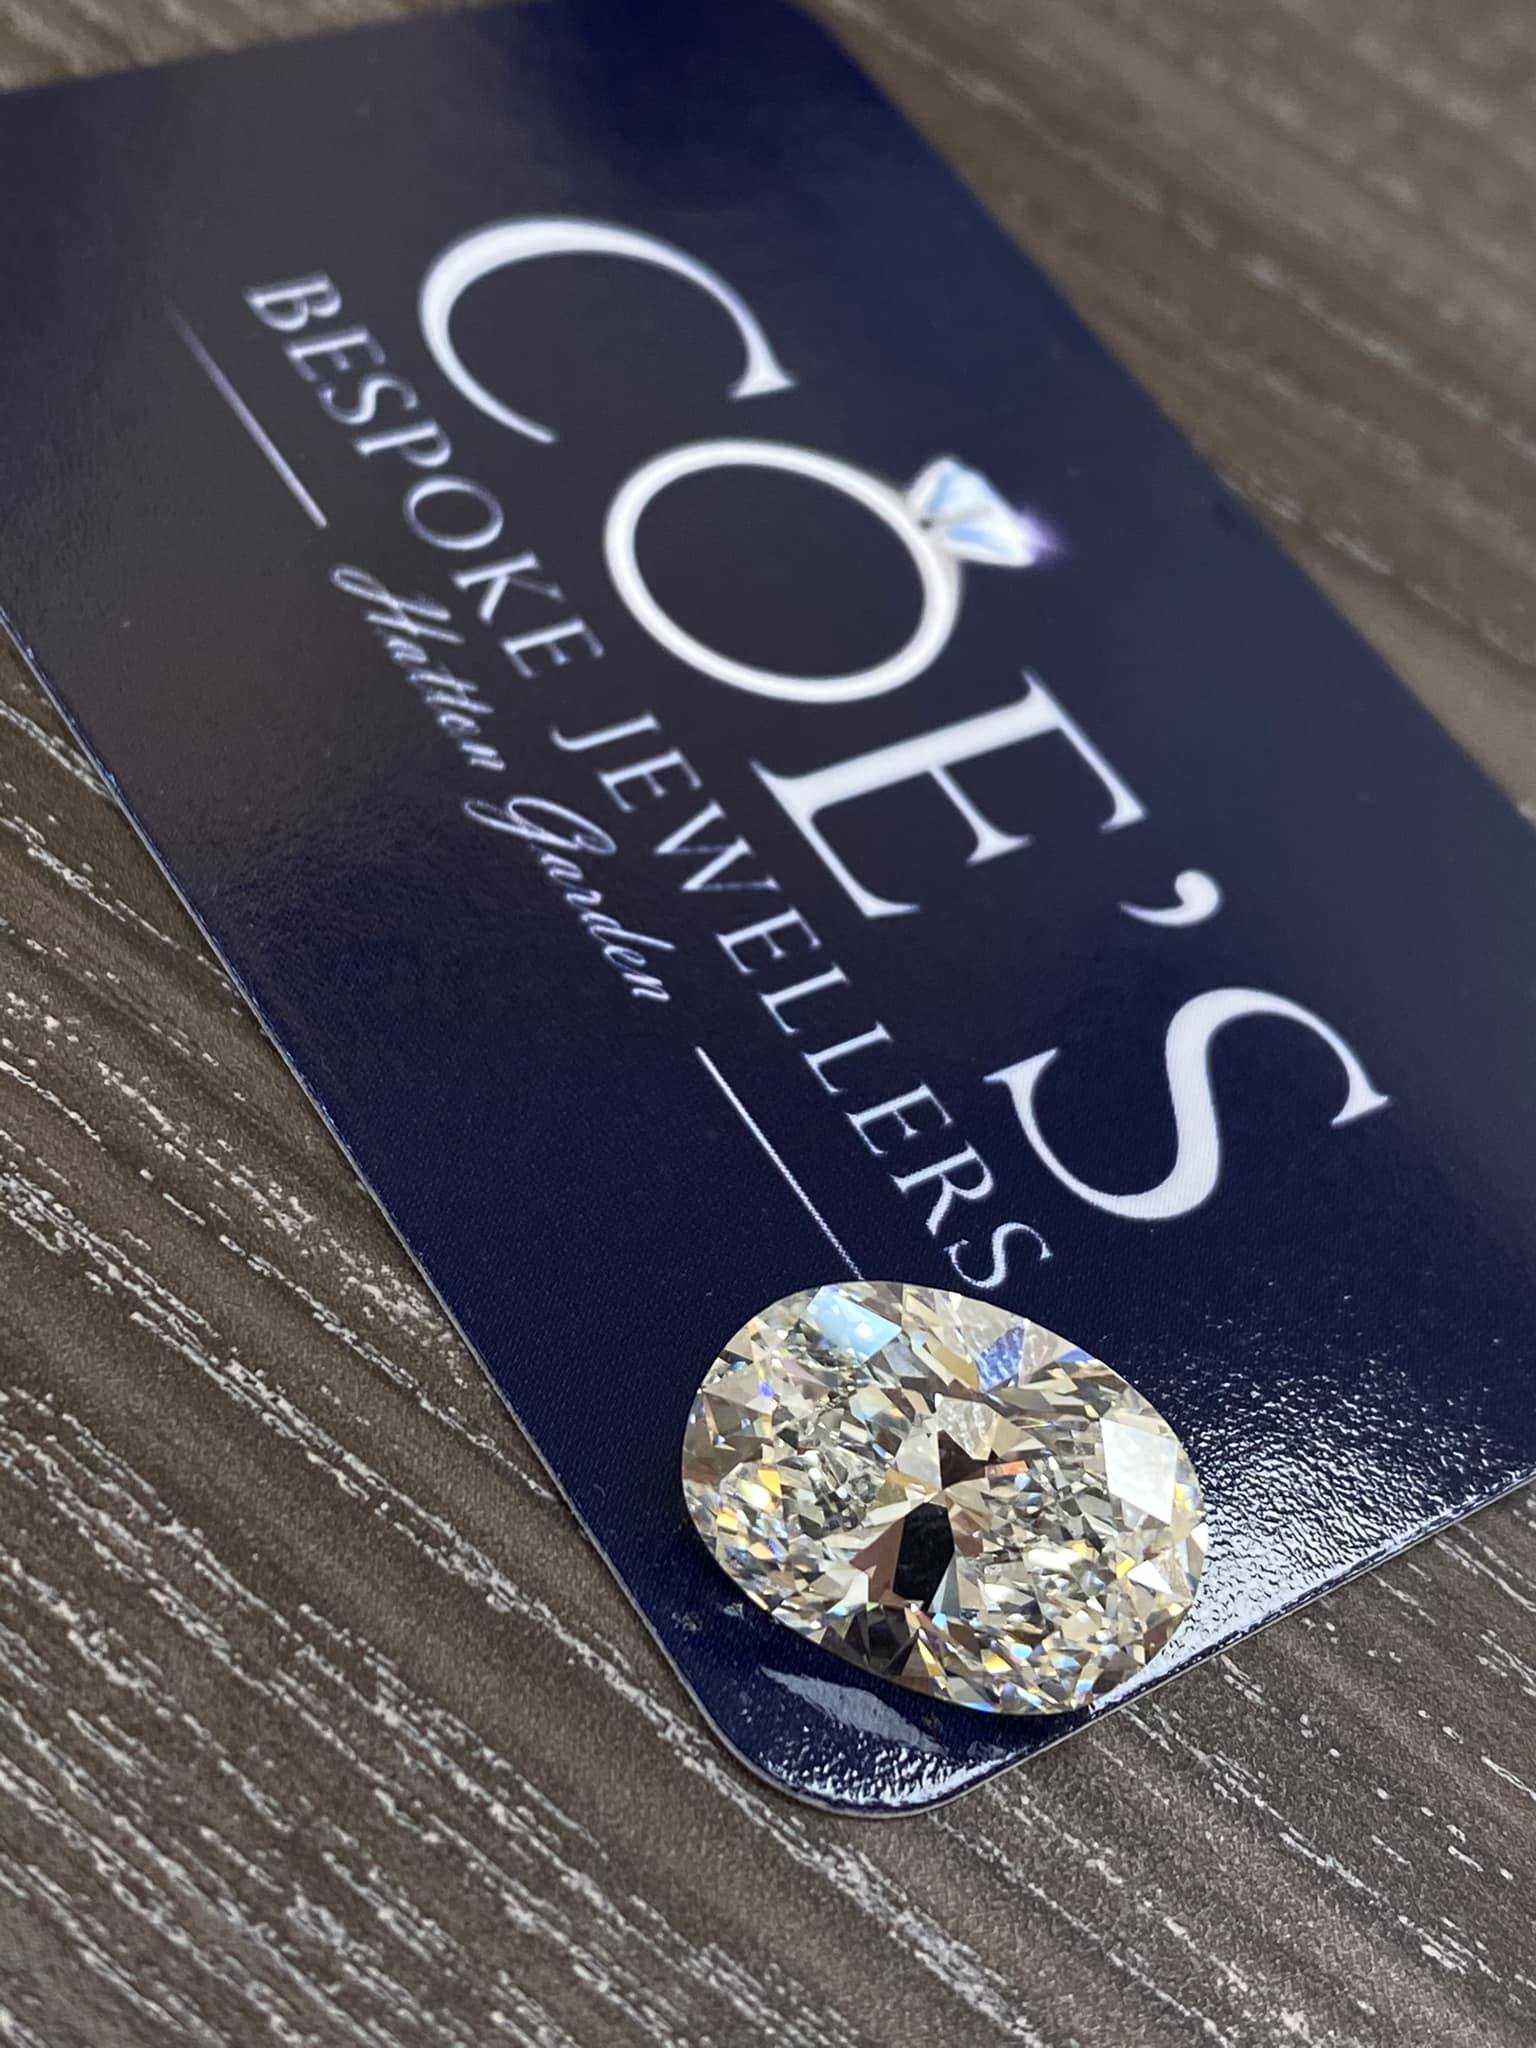 Grab the best deal on Diamond’s Jewellery at Coe’s bespoke Jewellers, Hatton Garden, London, United Kingdom